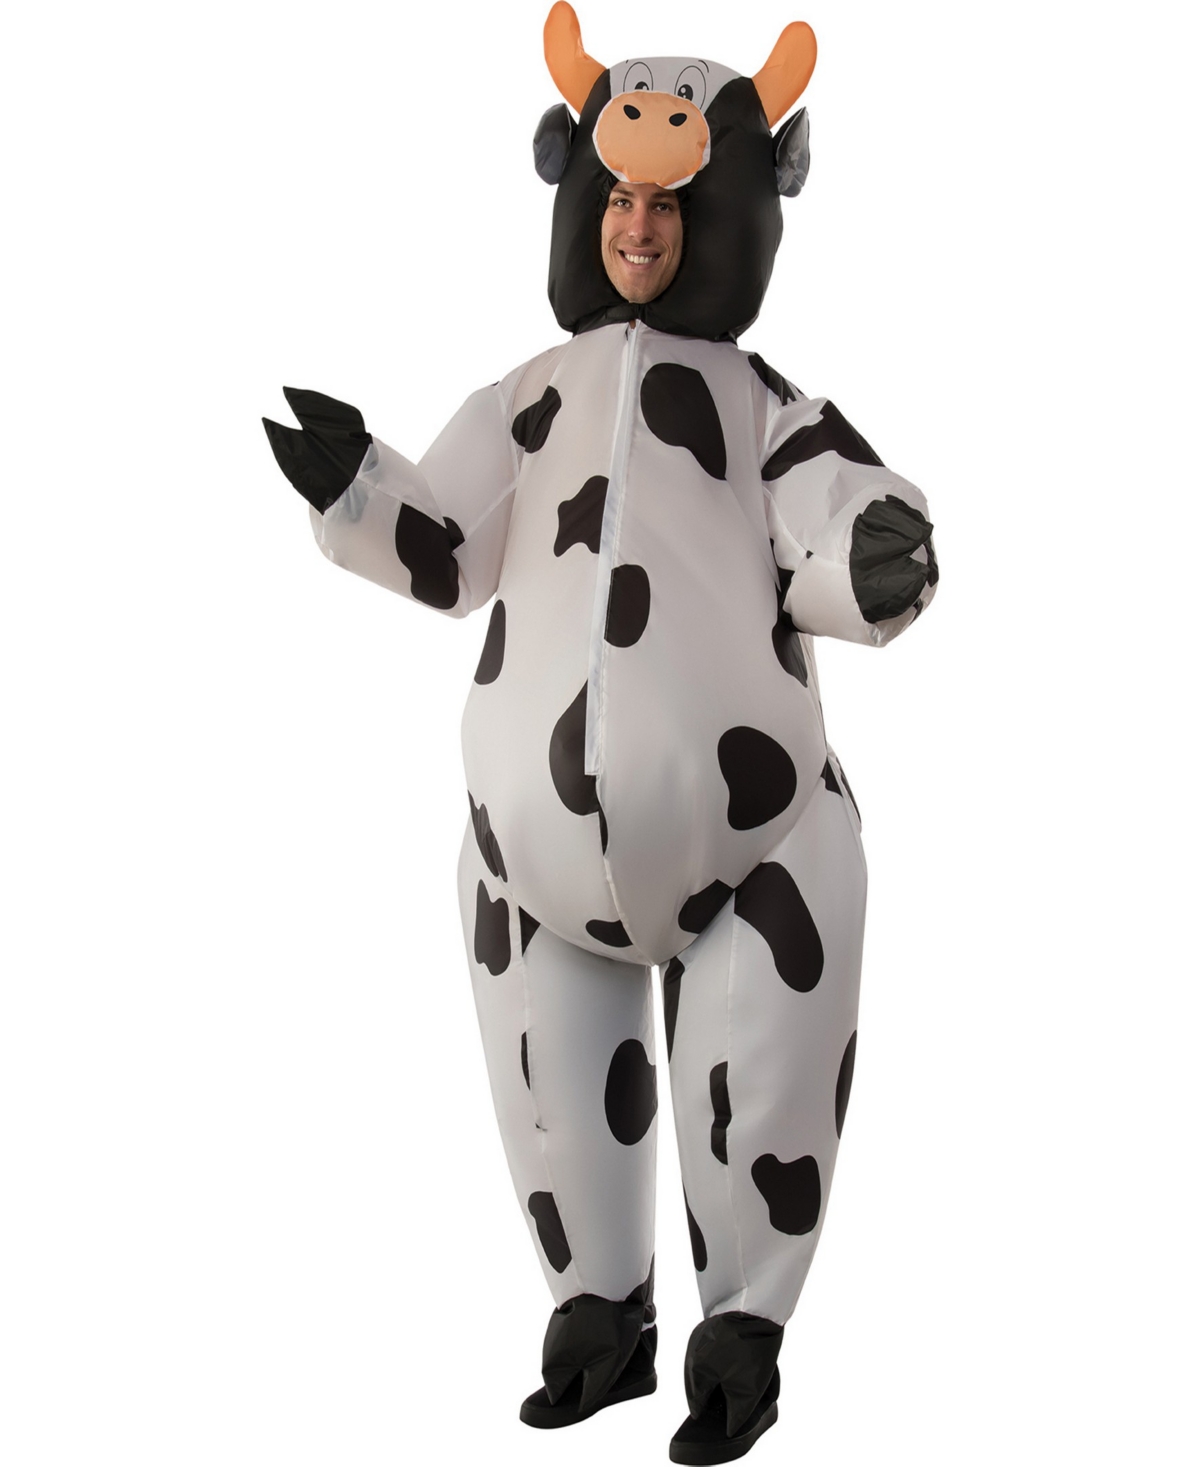 Buy Seasons Men's Cow Inflatable Costume - White